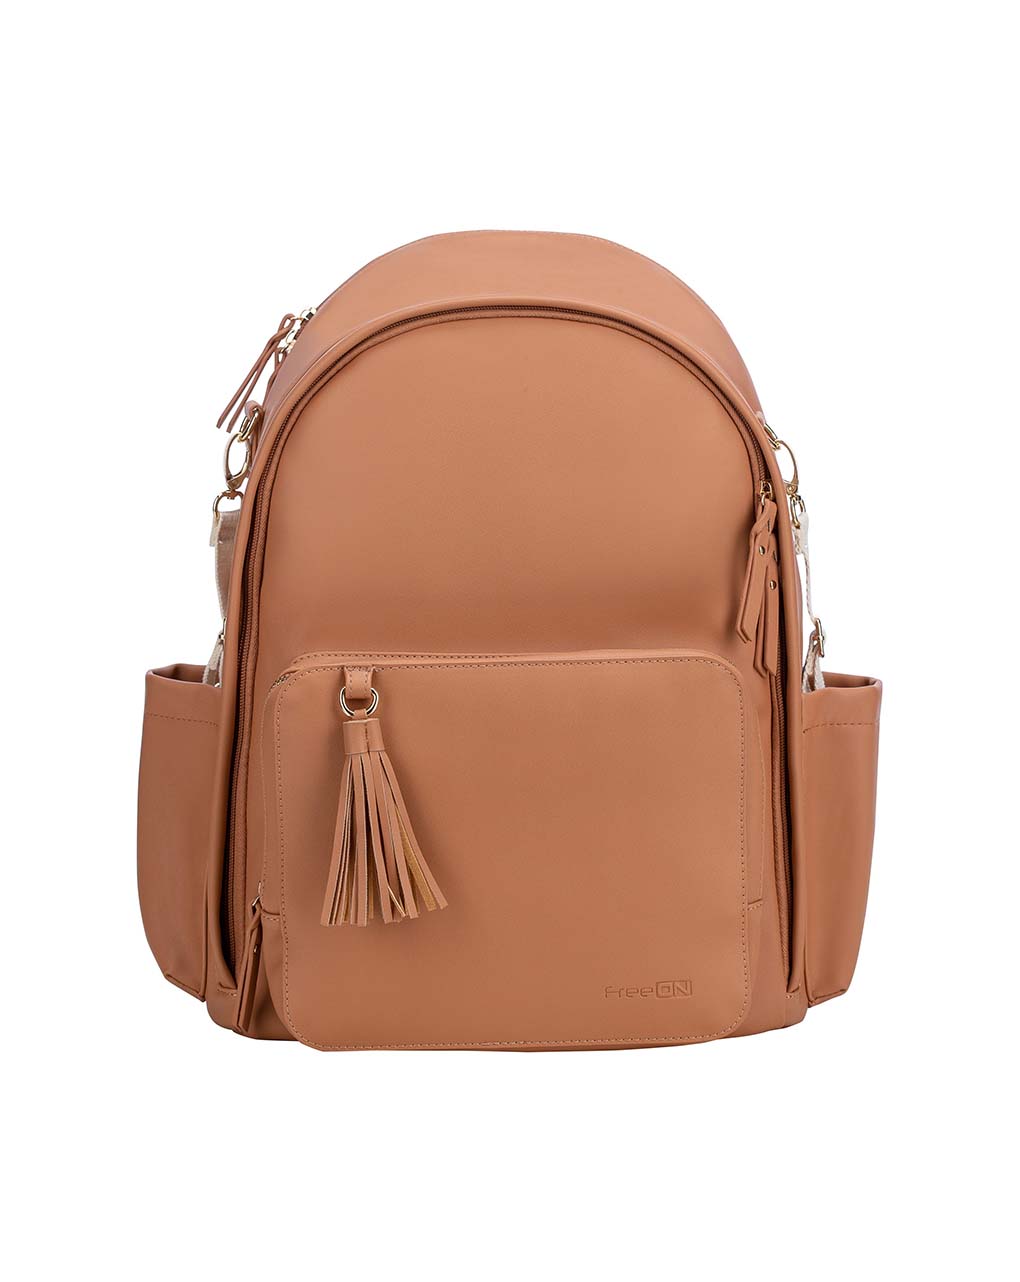 Freeon backpack / τσάντα αλλαξιέρα glamour 49010